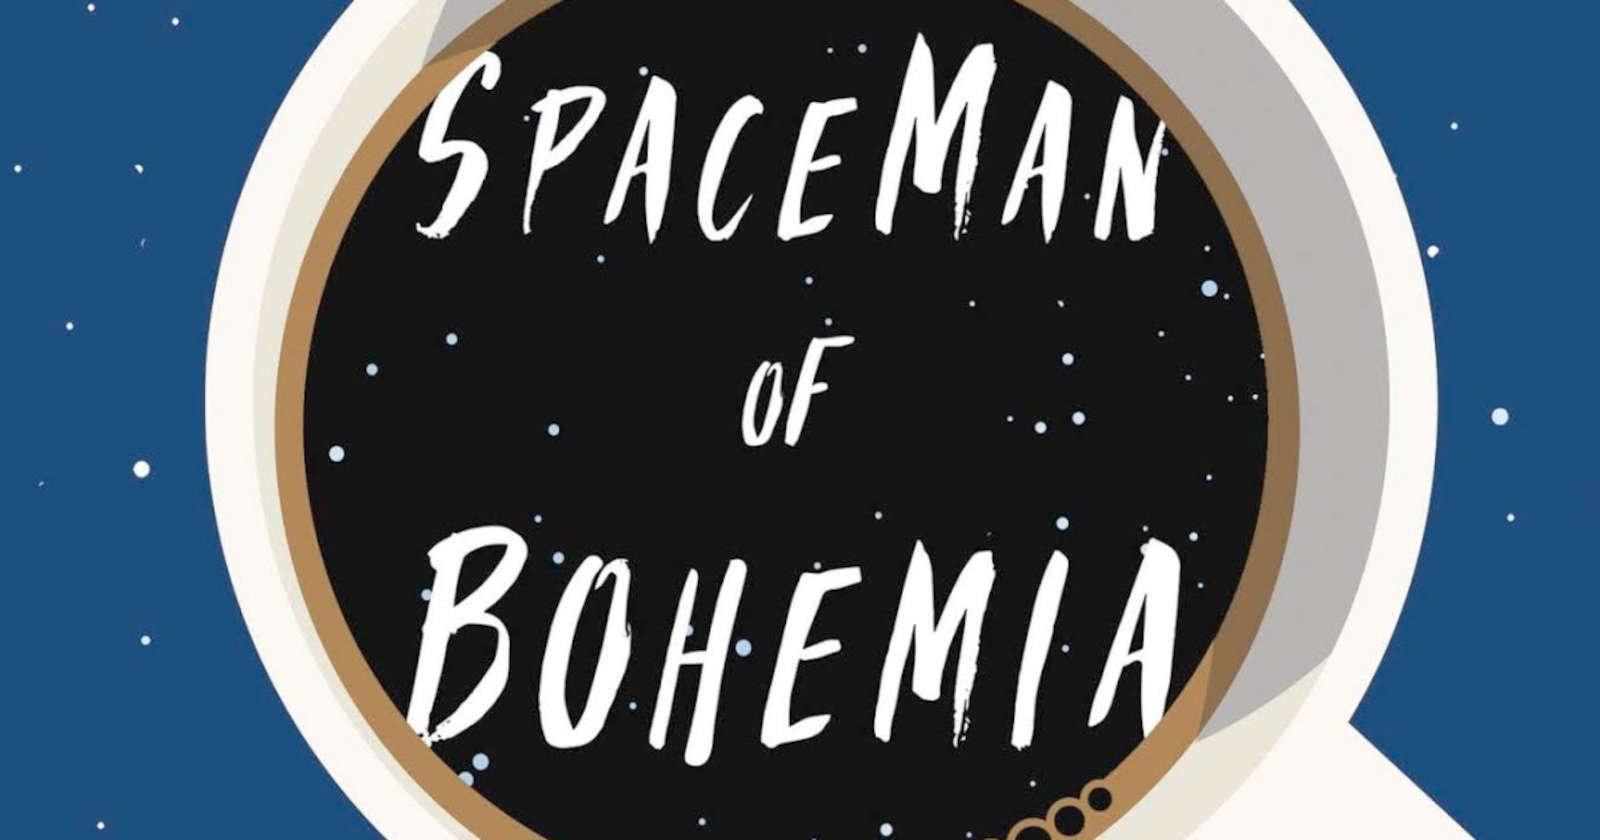 Spaceman of bohemia